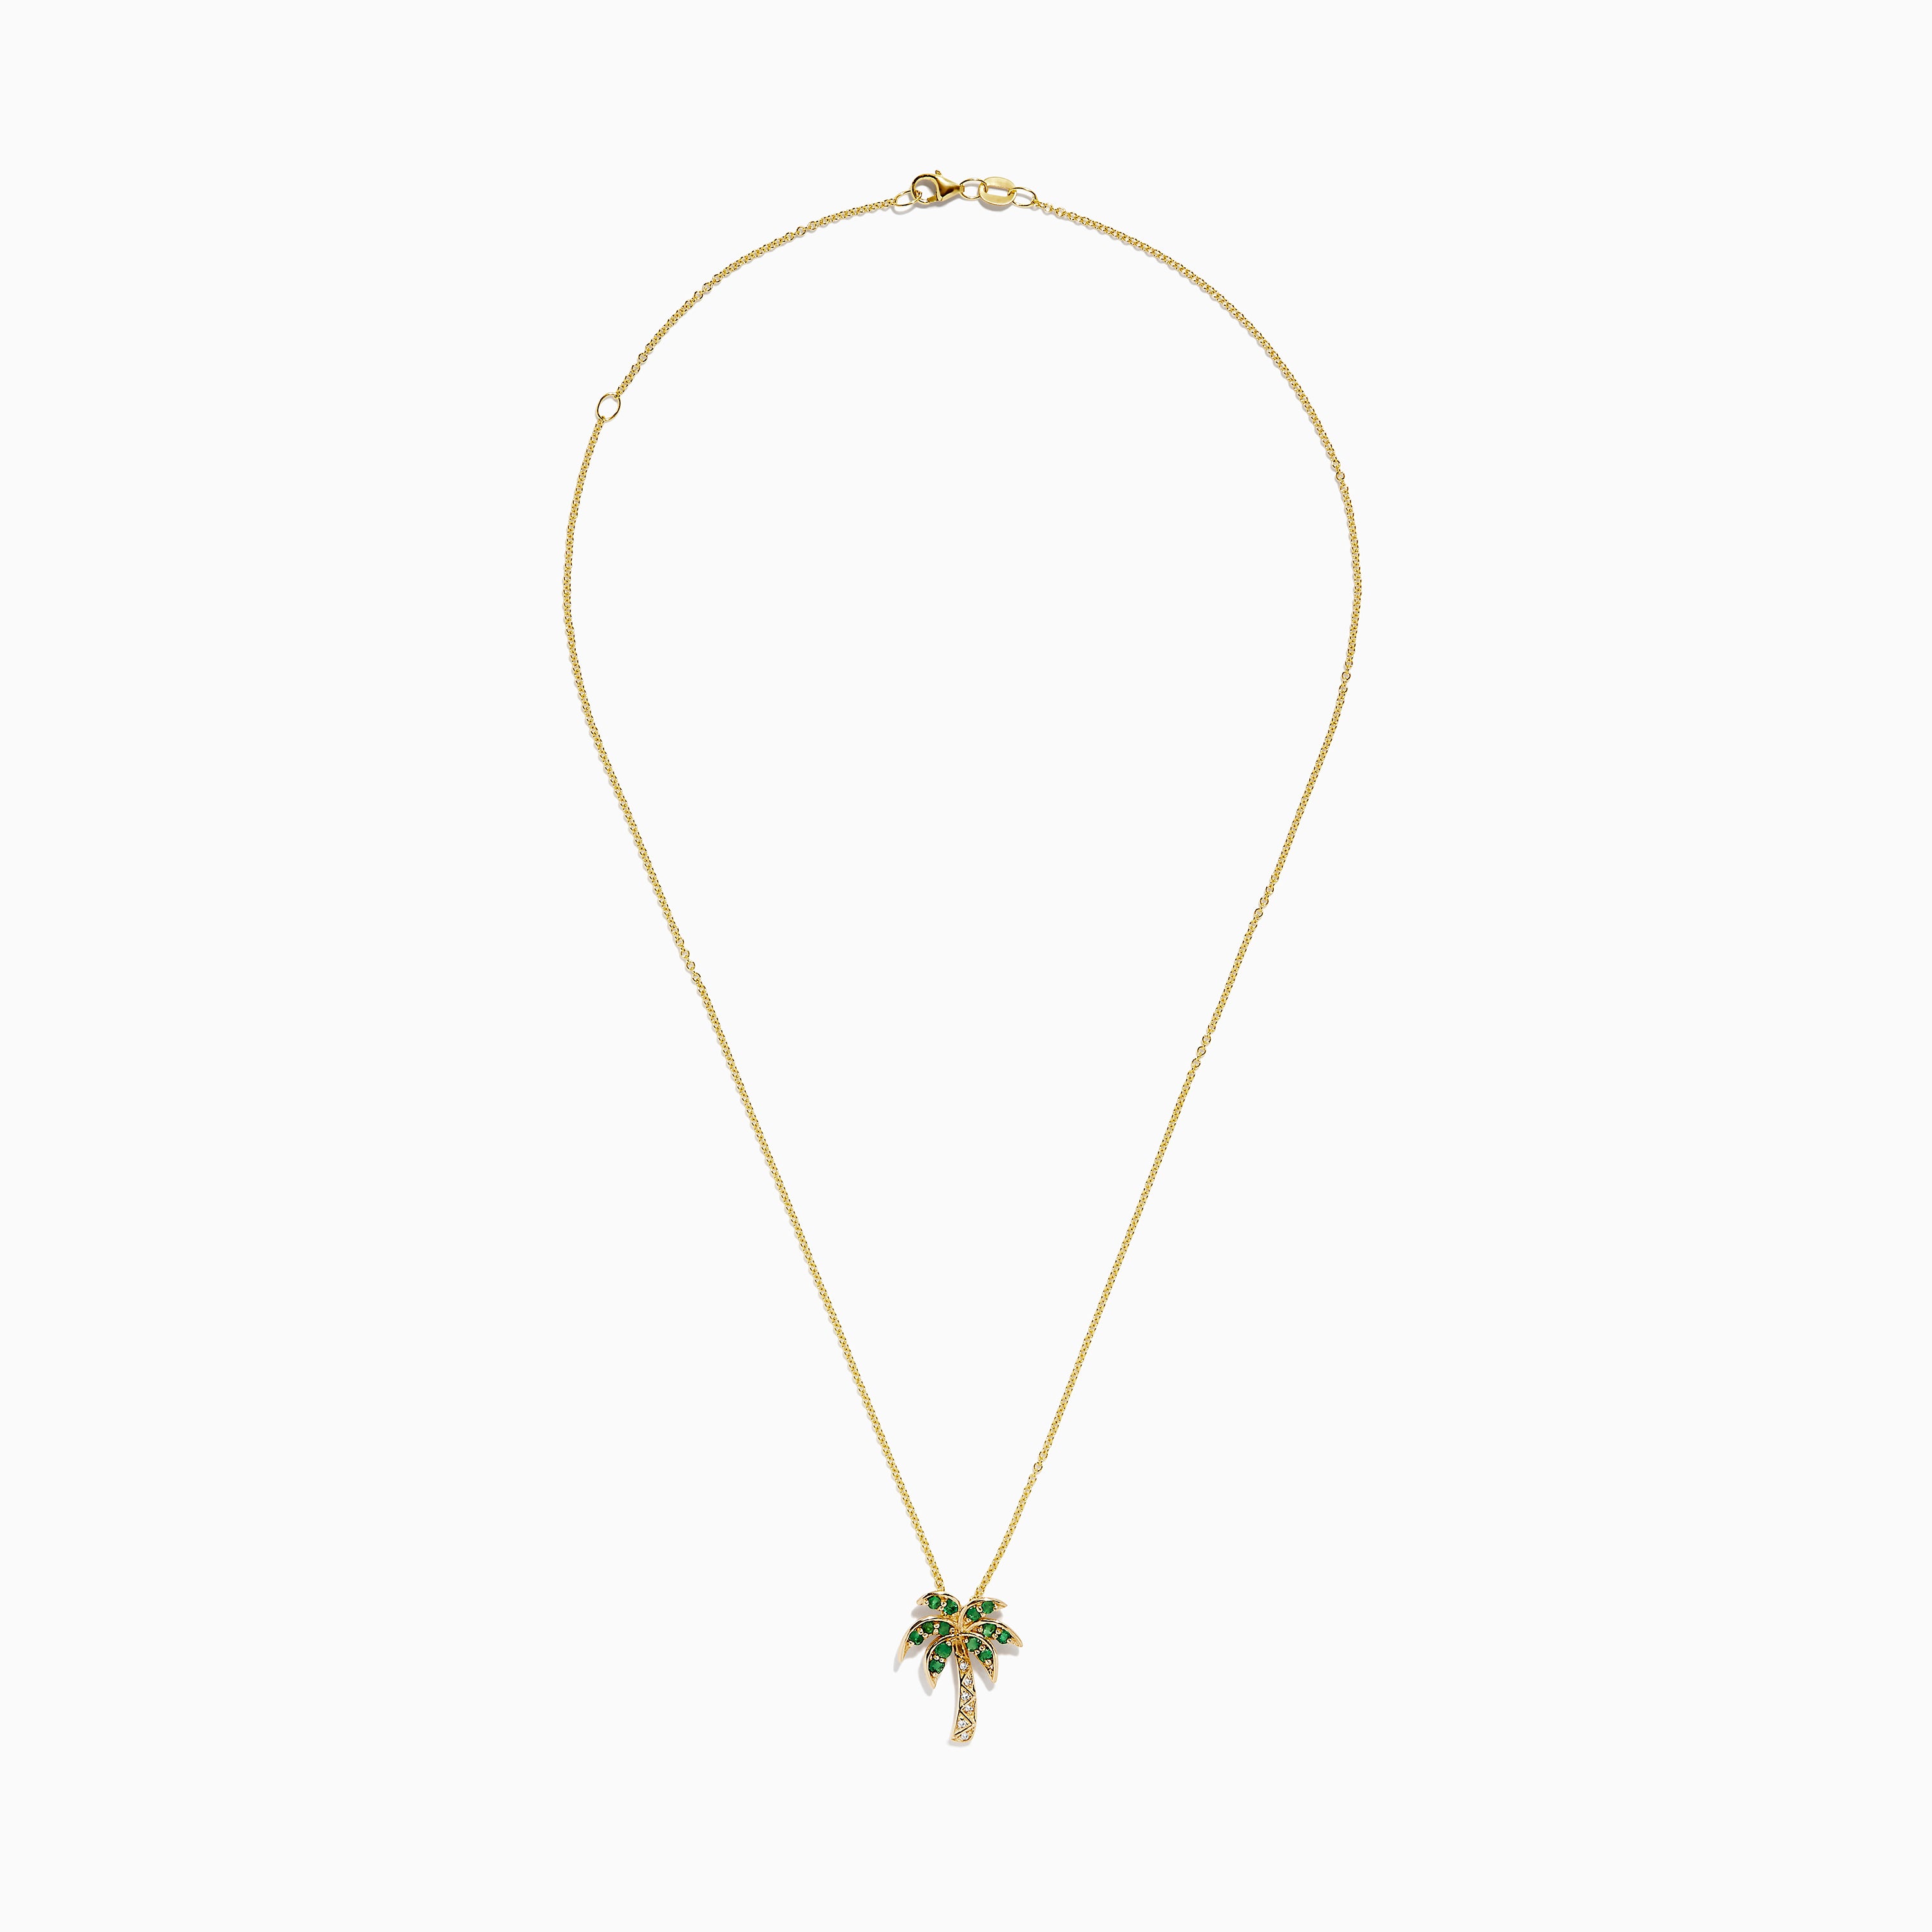 Effy Novelty 14K Yellow Gold Emerald and Diamond Palm Tree Pendant